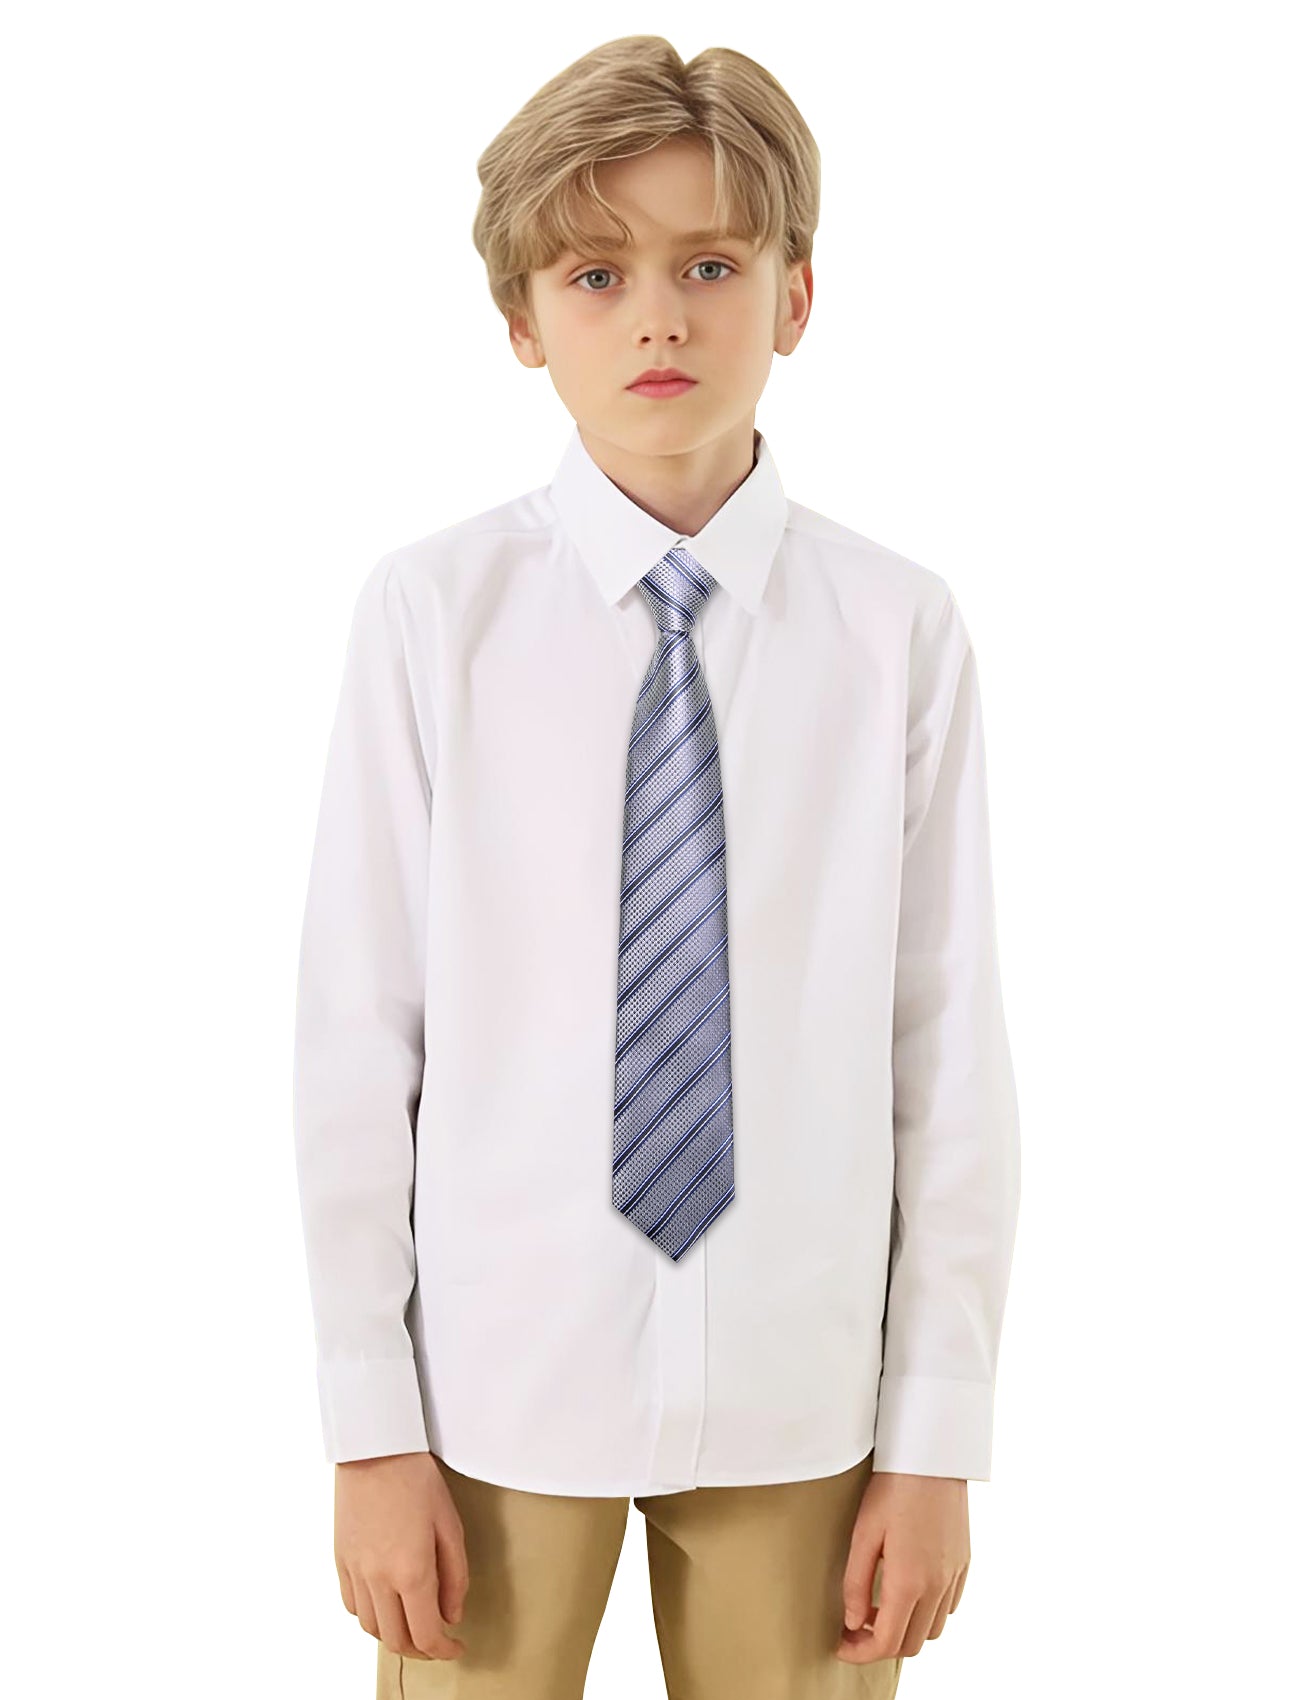 Barry.wang Kids Tie Grey Blue Striped Children's Silk Tie Hanky Set